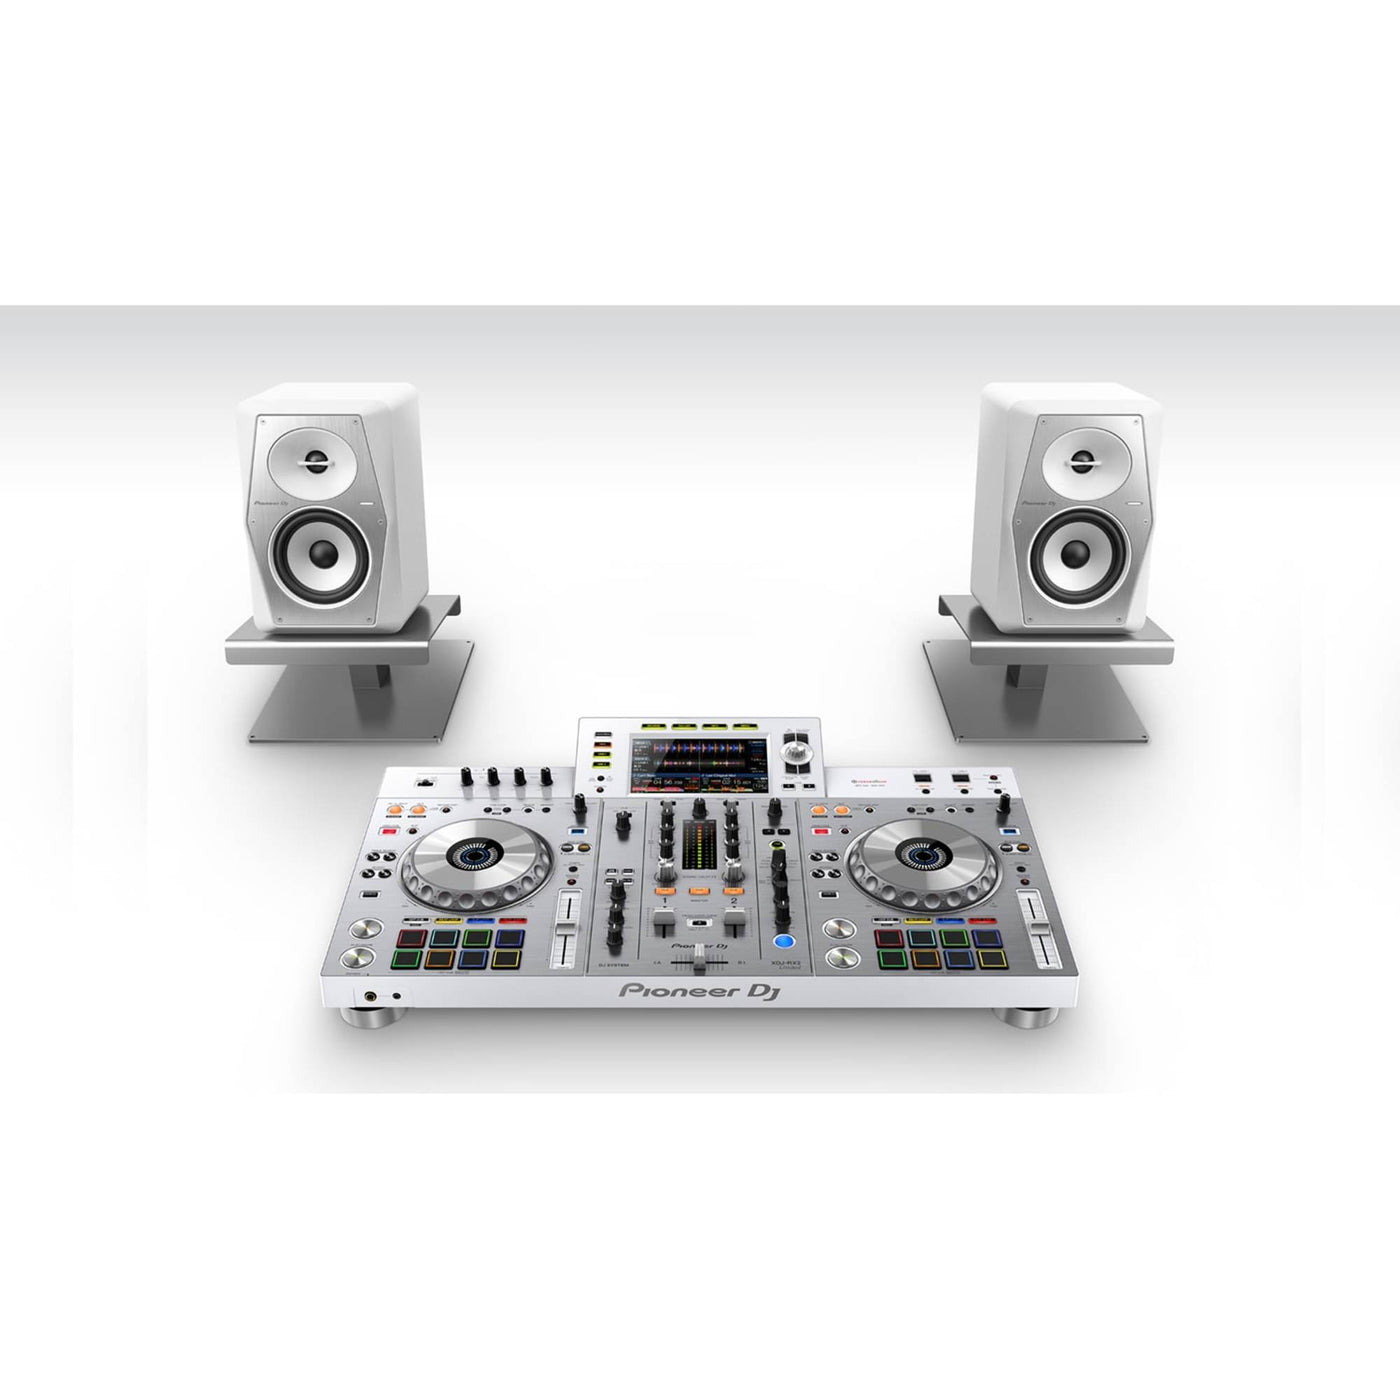 Pioneer DJ VM-50-W 5.25" Professional Active Monitor Speaker, Audio Equipment for Recording & DJ Sets, White